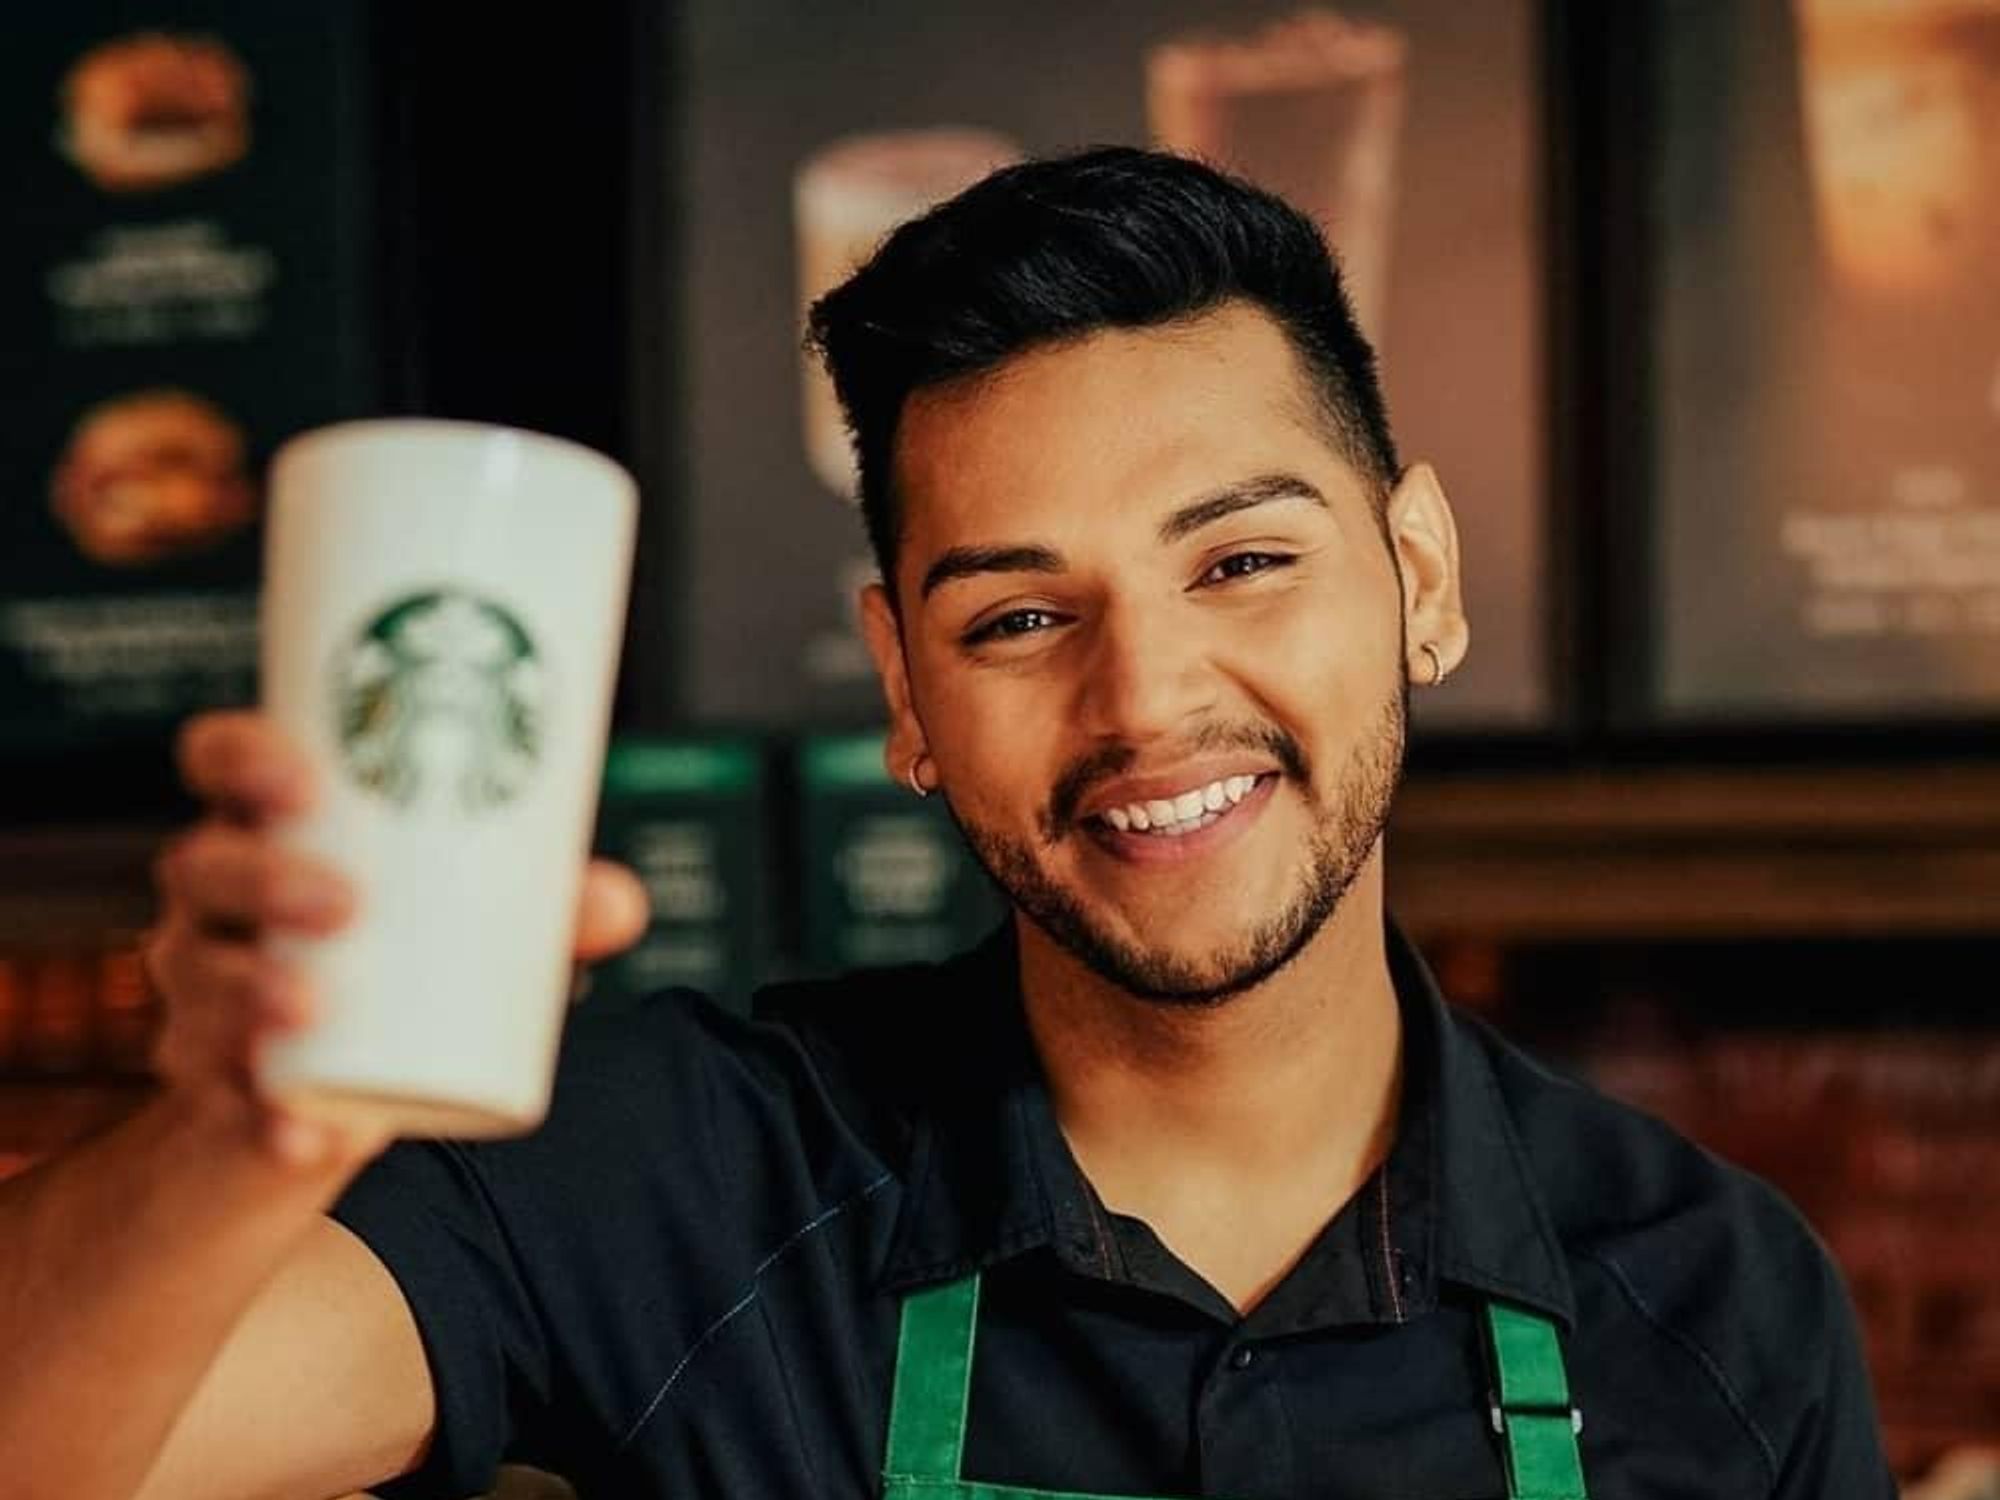 Starbucks brings state-of-the-art Black Eagle espresso machine